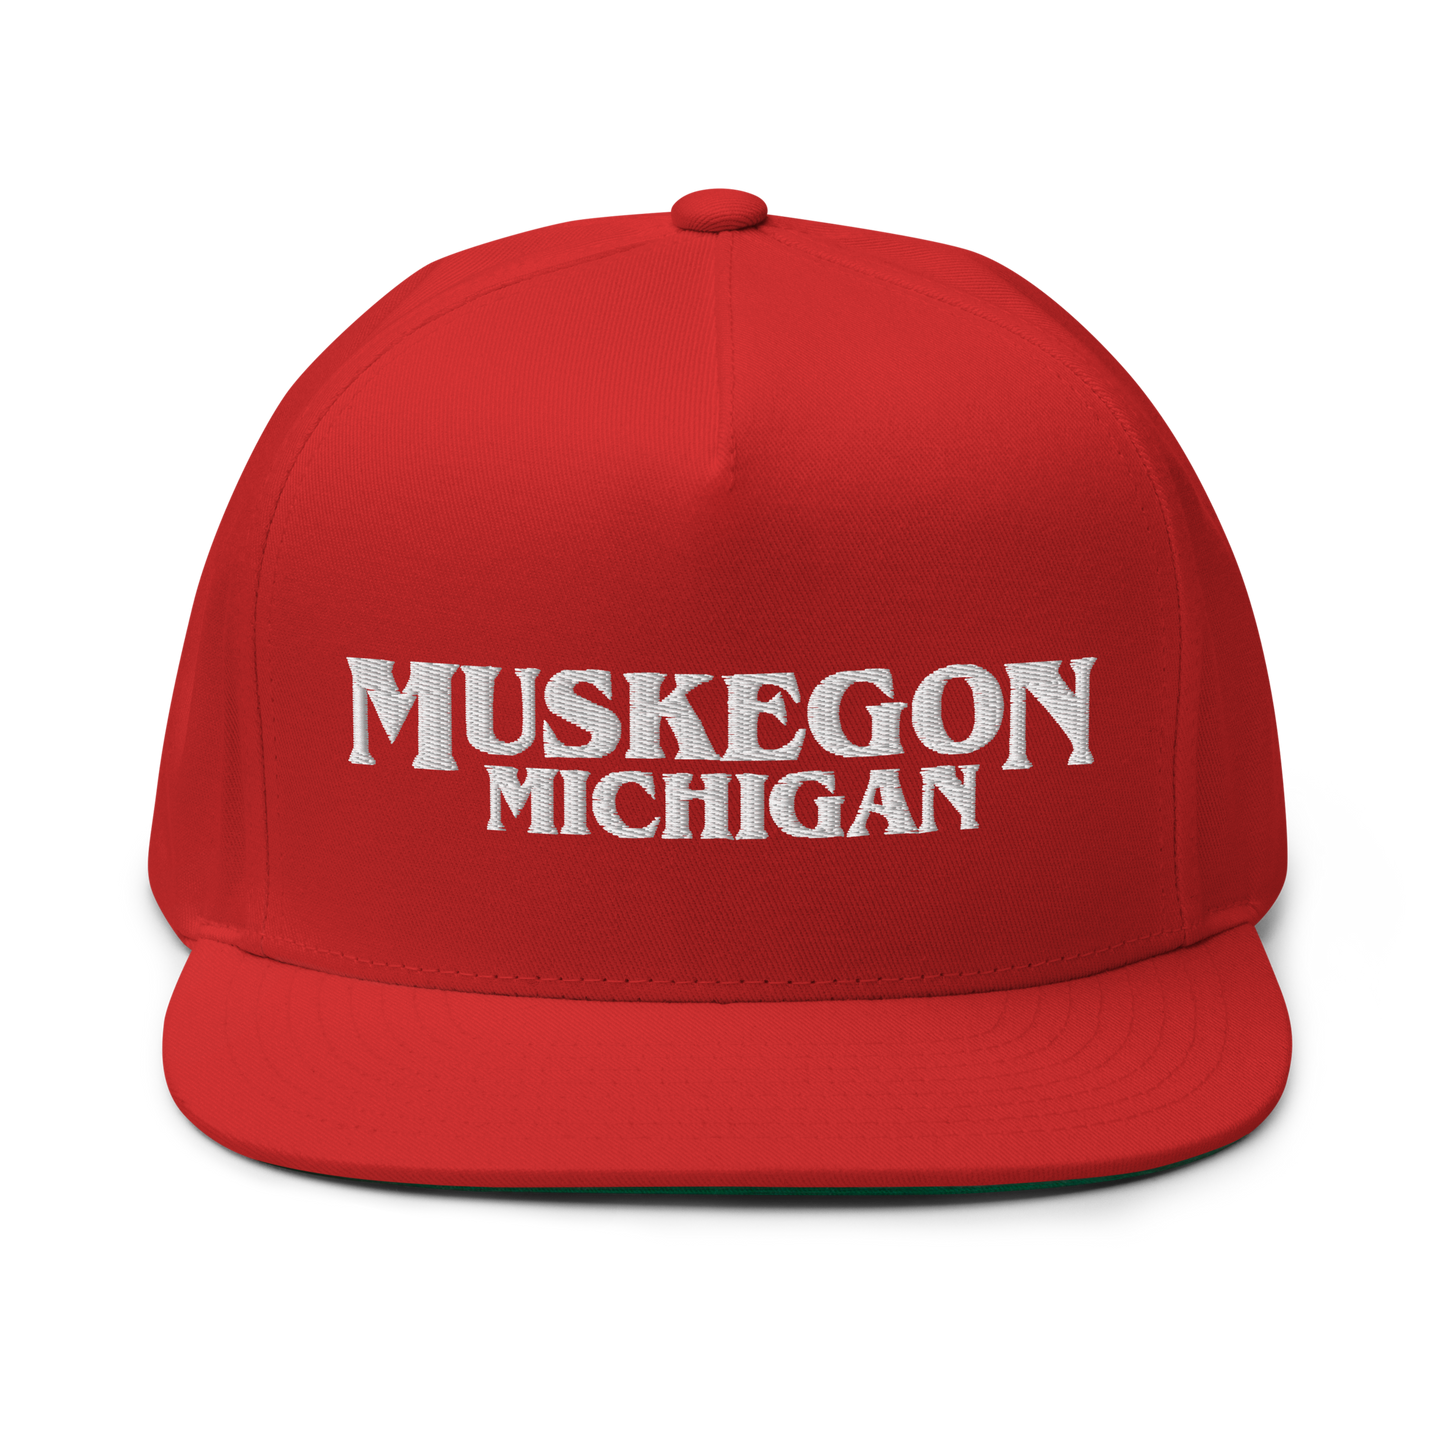 'Muskegon Michigan' Flat Bill Snapback (1980s Drama Parody)